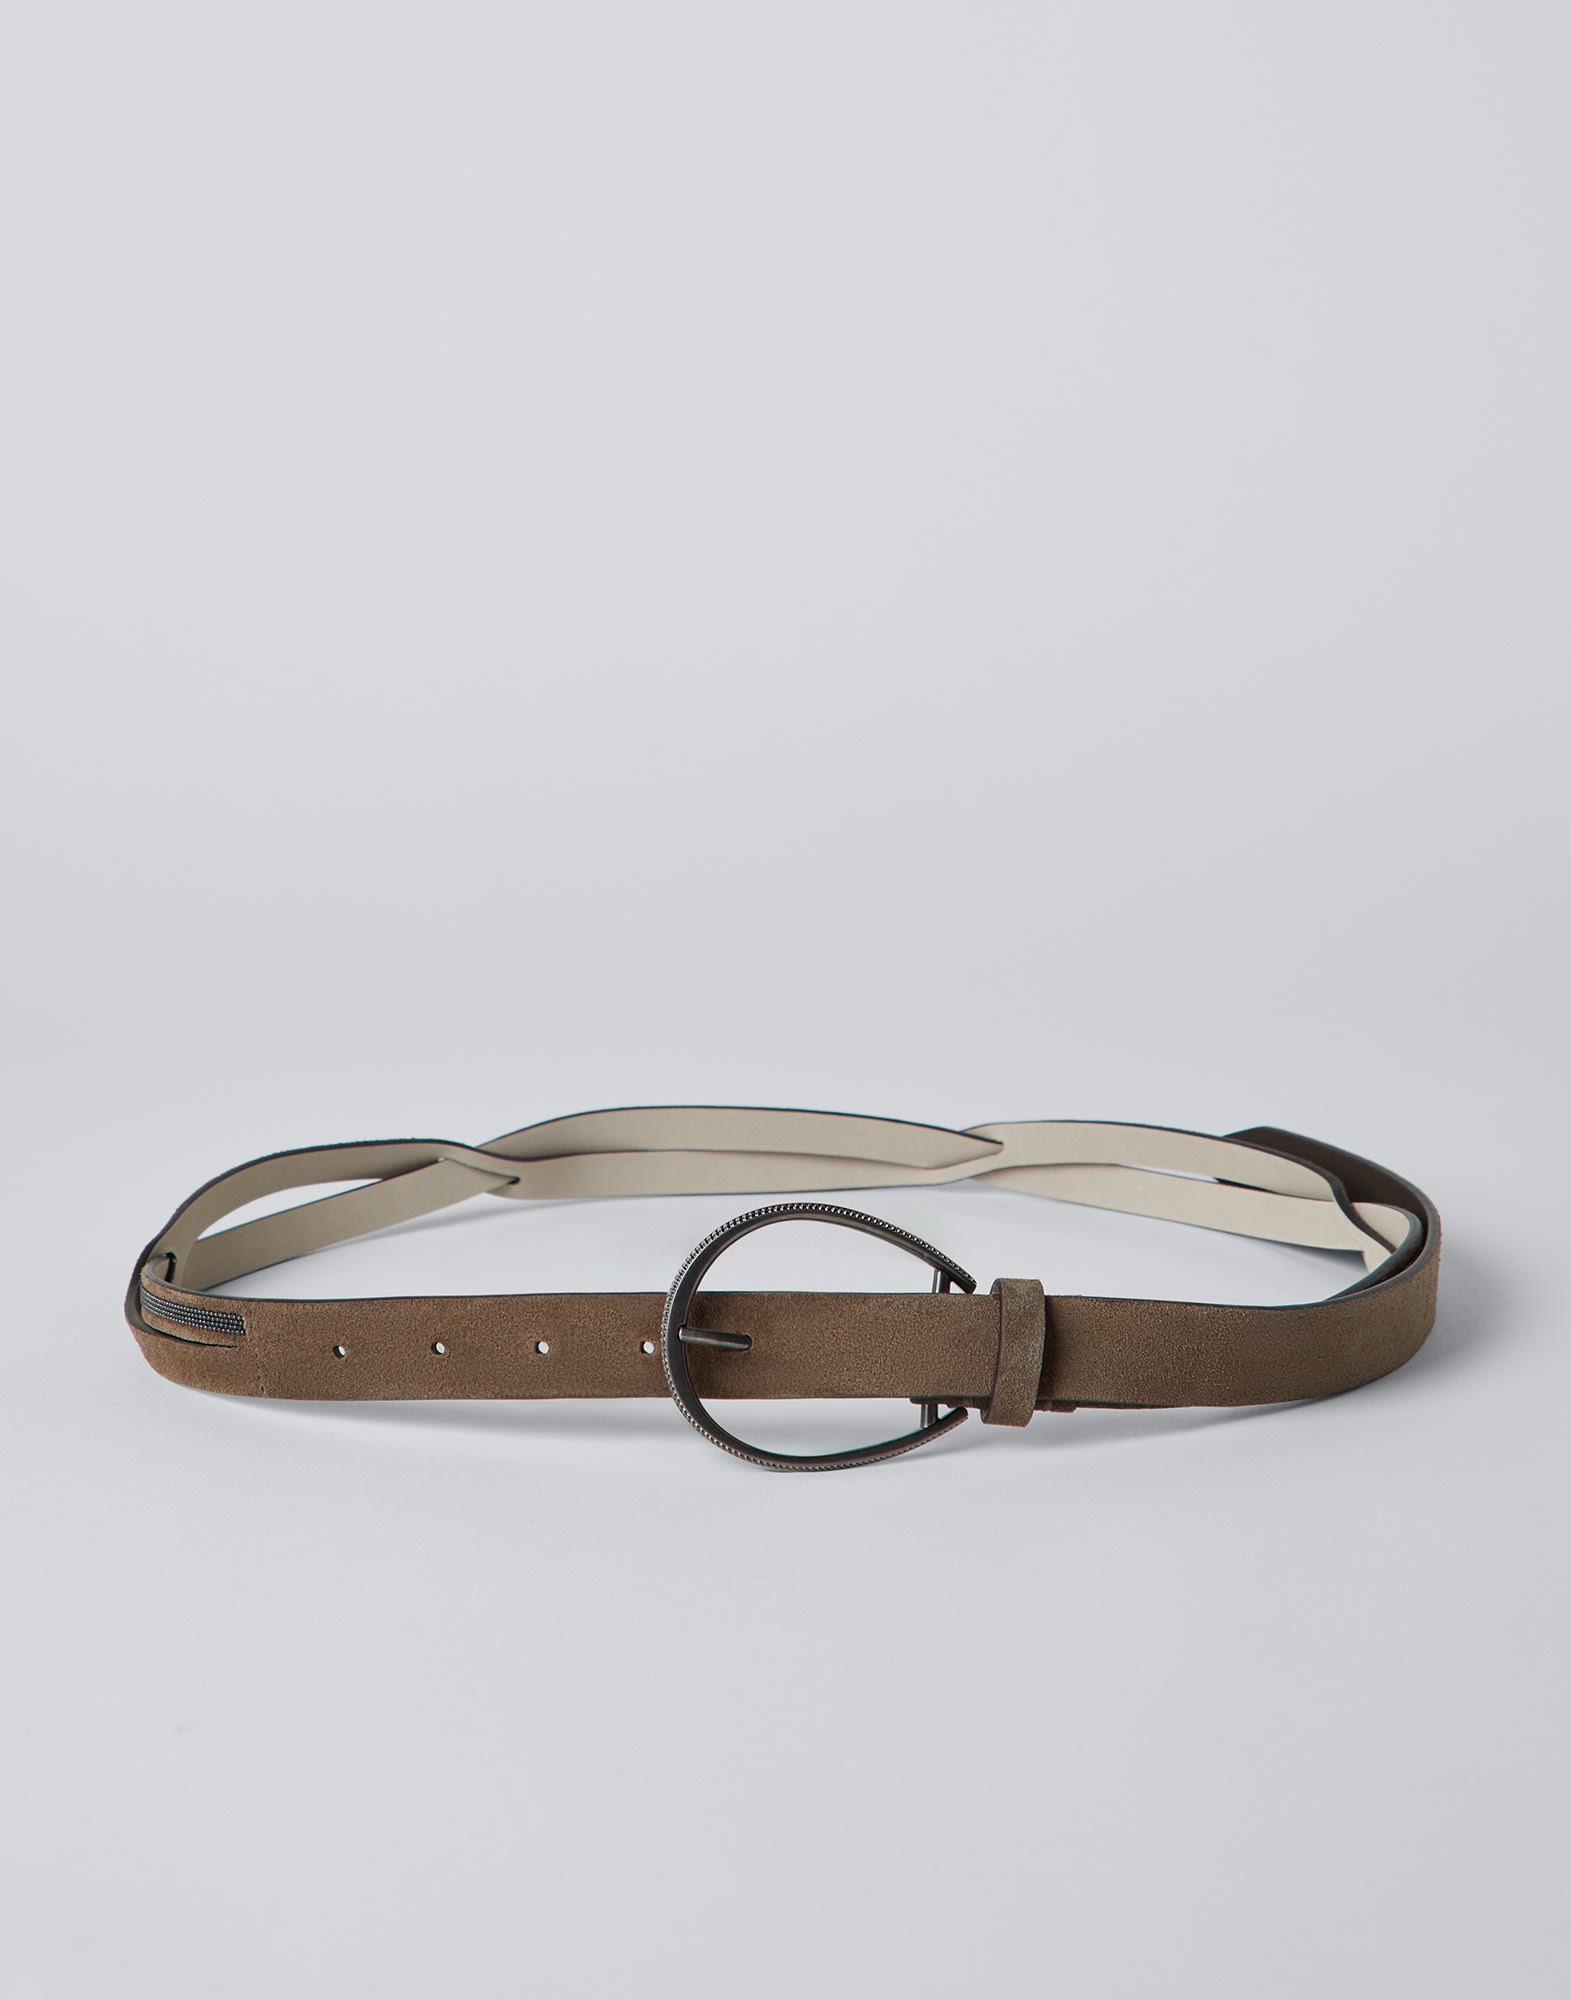 Suede calfskin shiny braid belt - 1